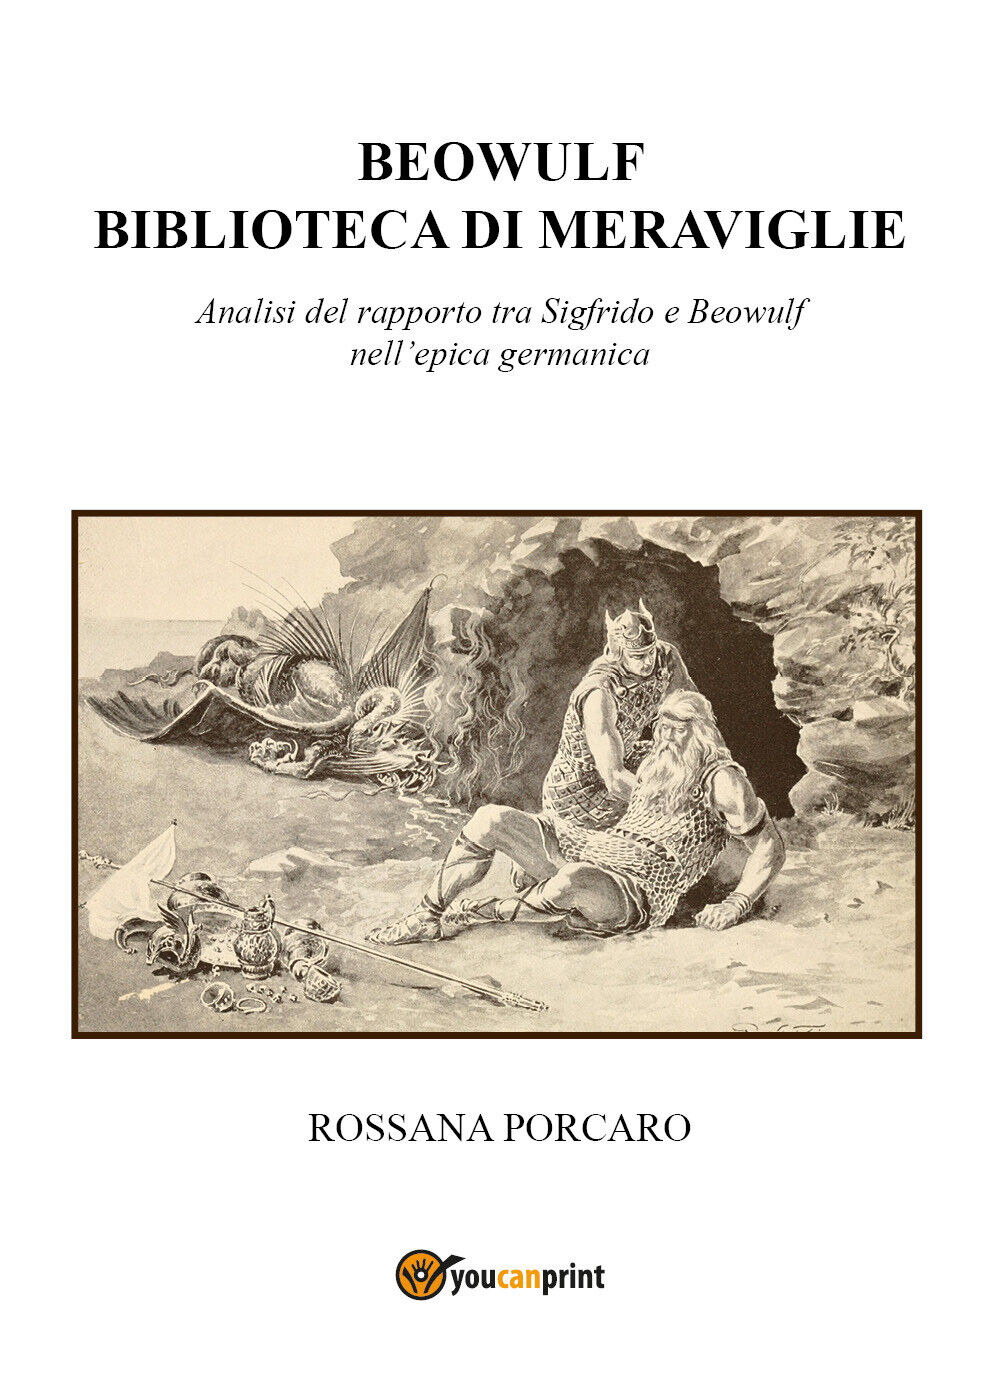 Beowulf biblioteca di meraviglie  di Rossana Porcaro,  2021,  Youcanprint libro usato